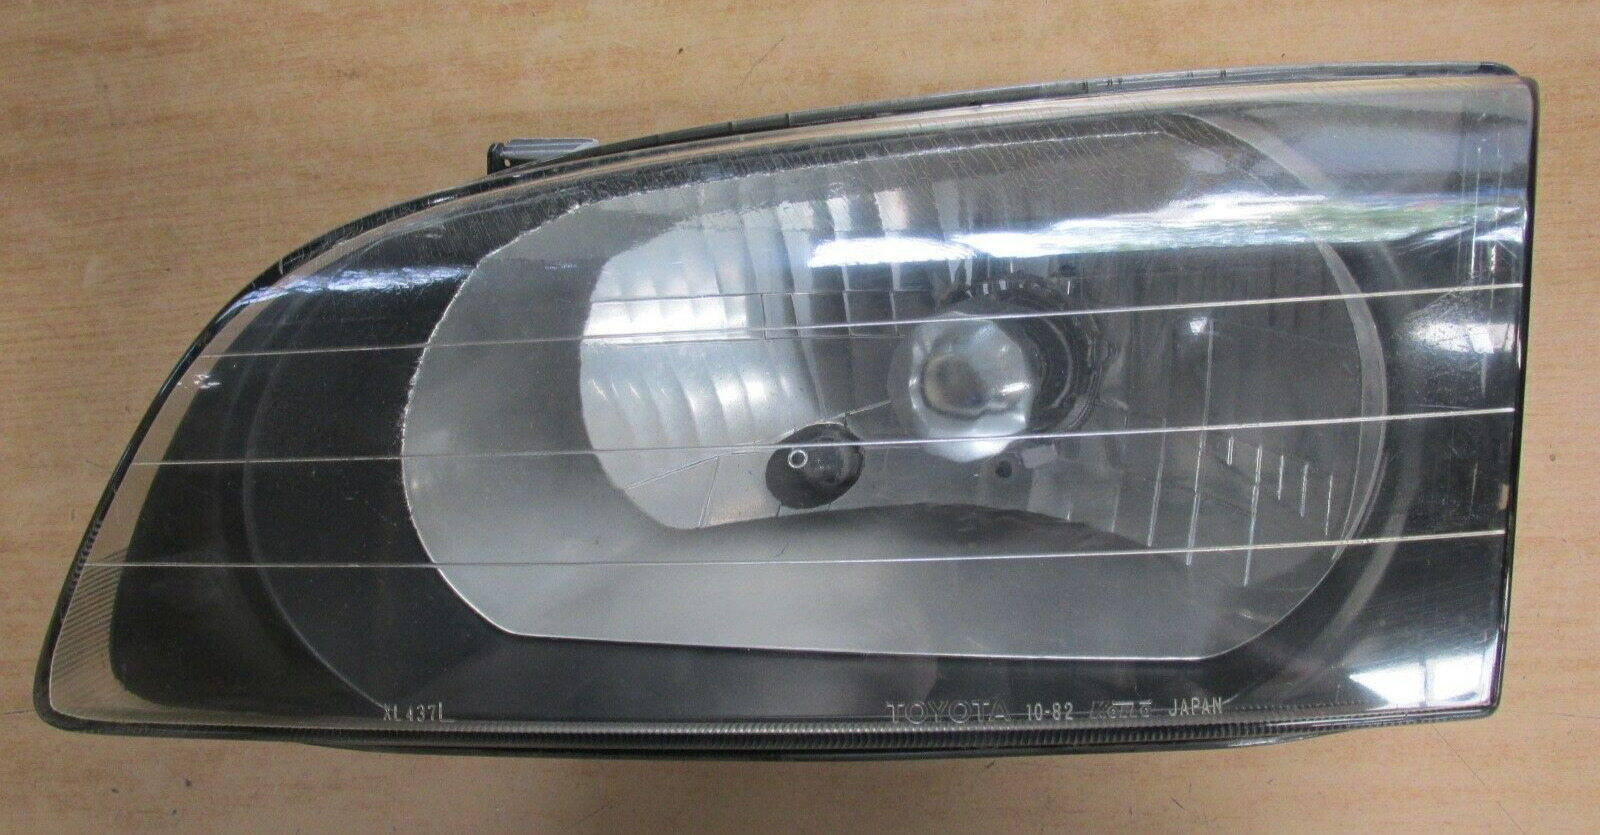 JDM Toyota Starlet Glanza EP91 Left Headlight Light KOITO 10-82